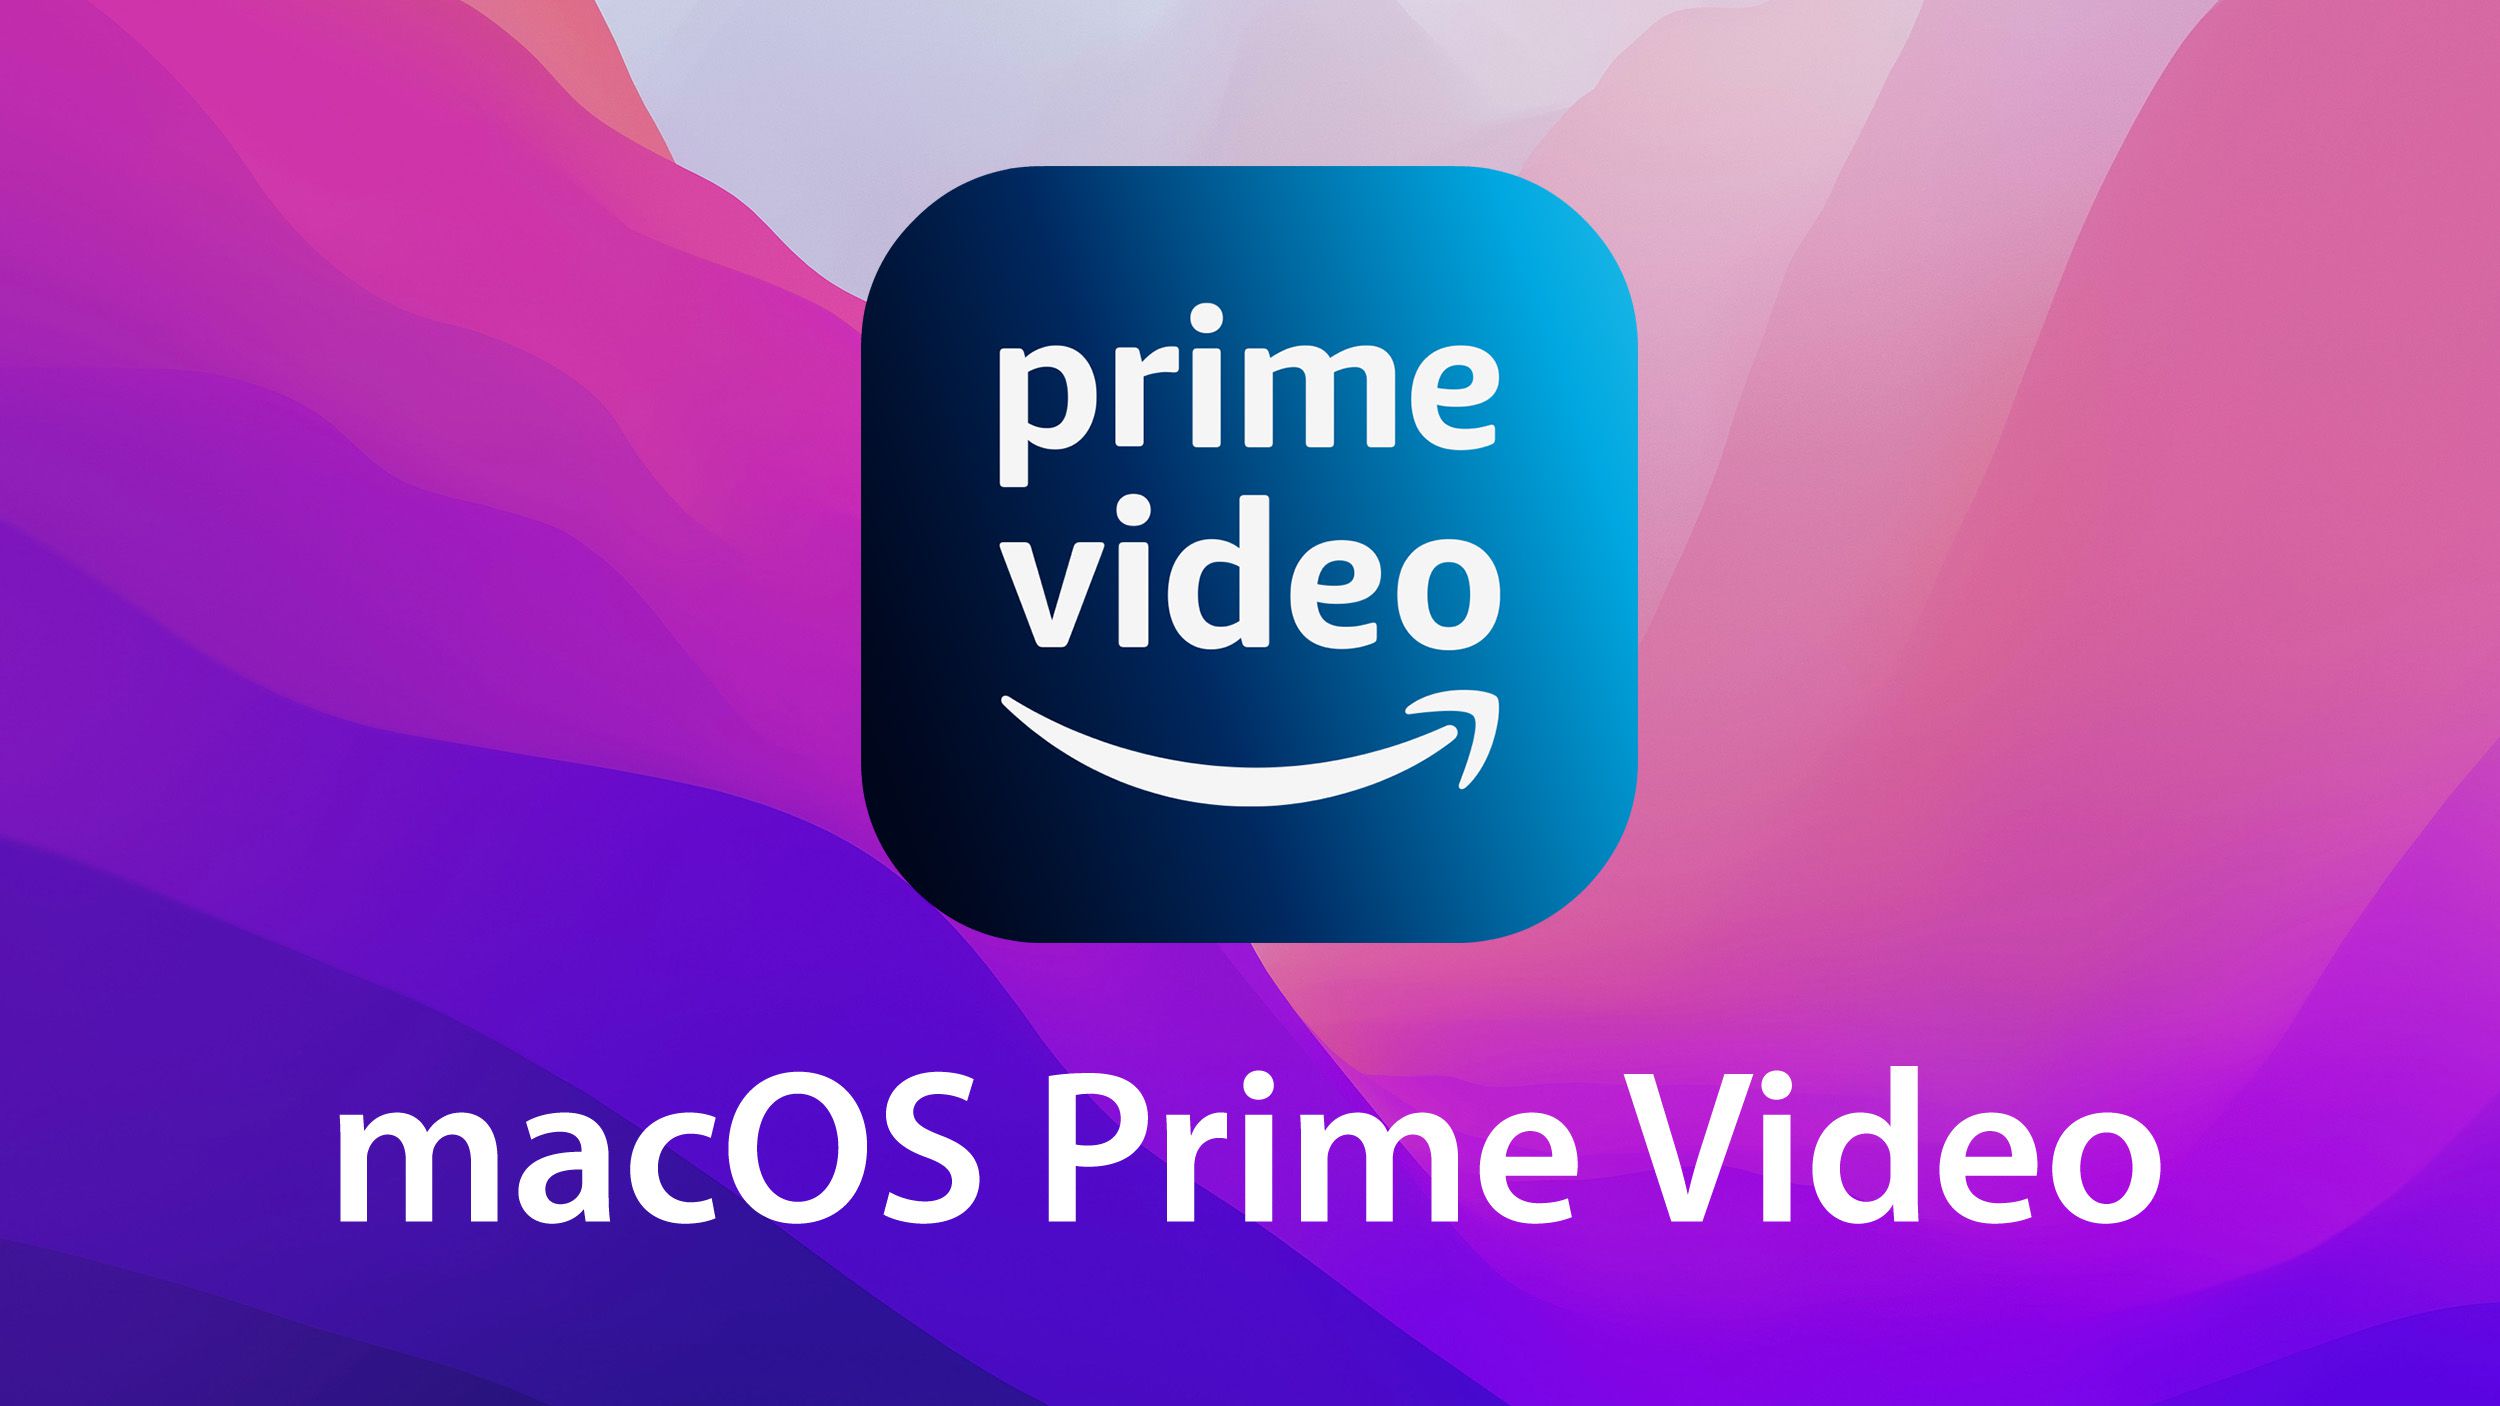 prime video app for macos